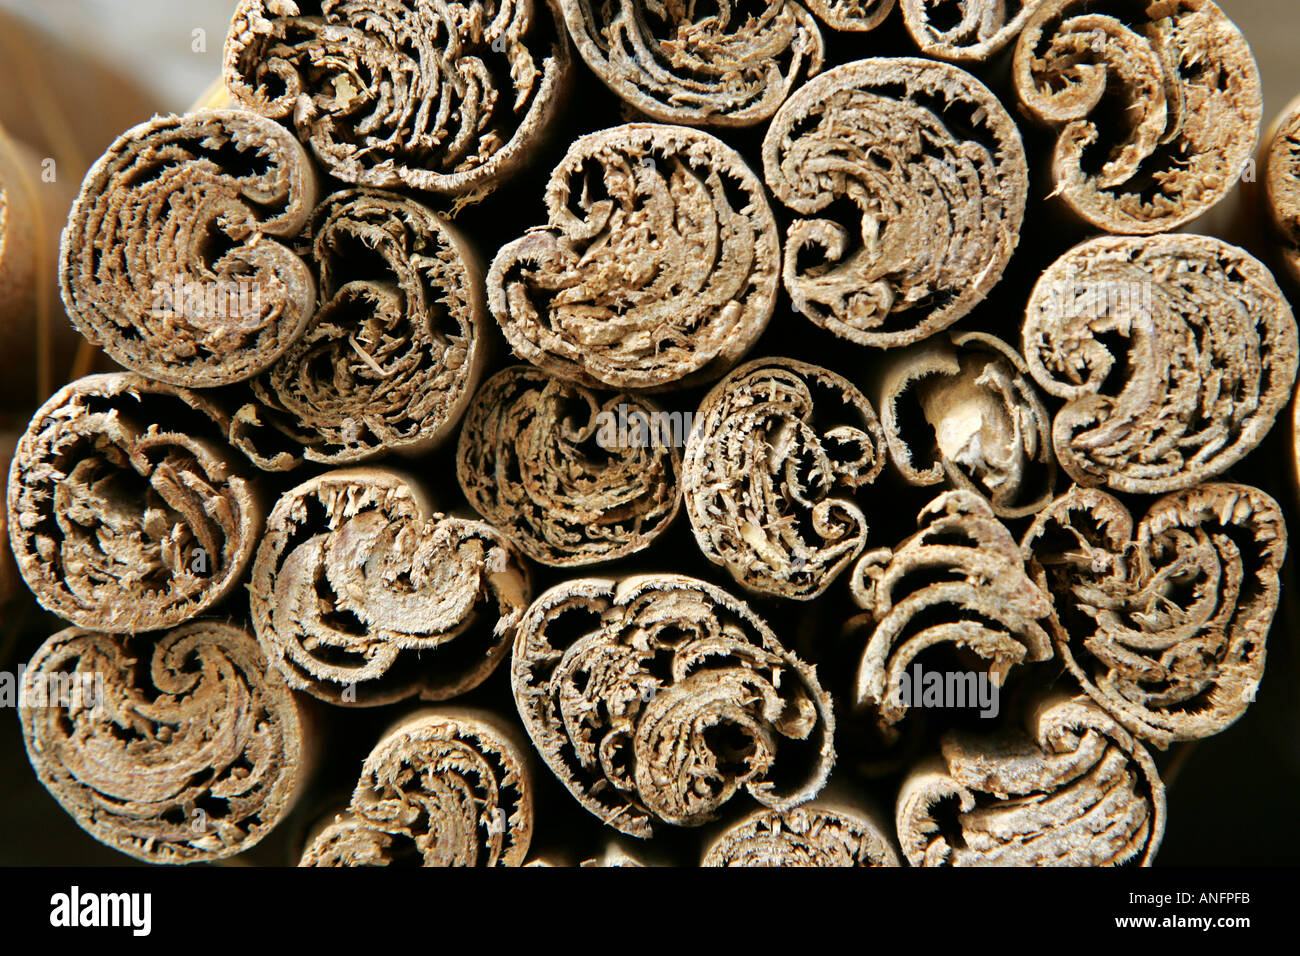 LKA, Sri Lanka : Siddhalepa Ayurveda Resort , herbs, spieces for the ayurvedic cuisine. cinnamon sticks, dryed, rolled. Stock Photo